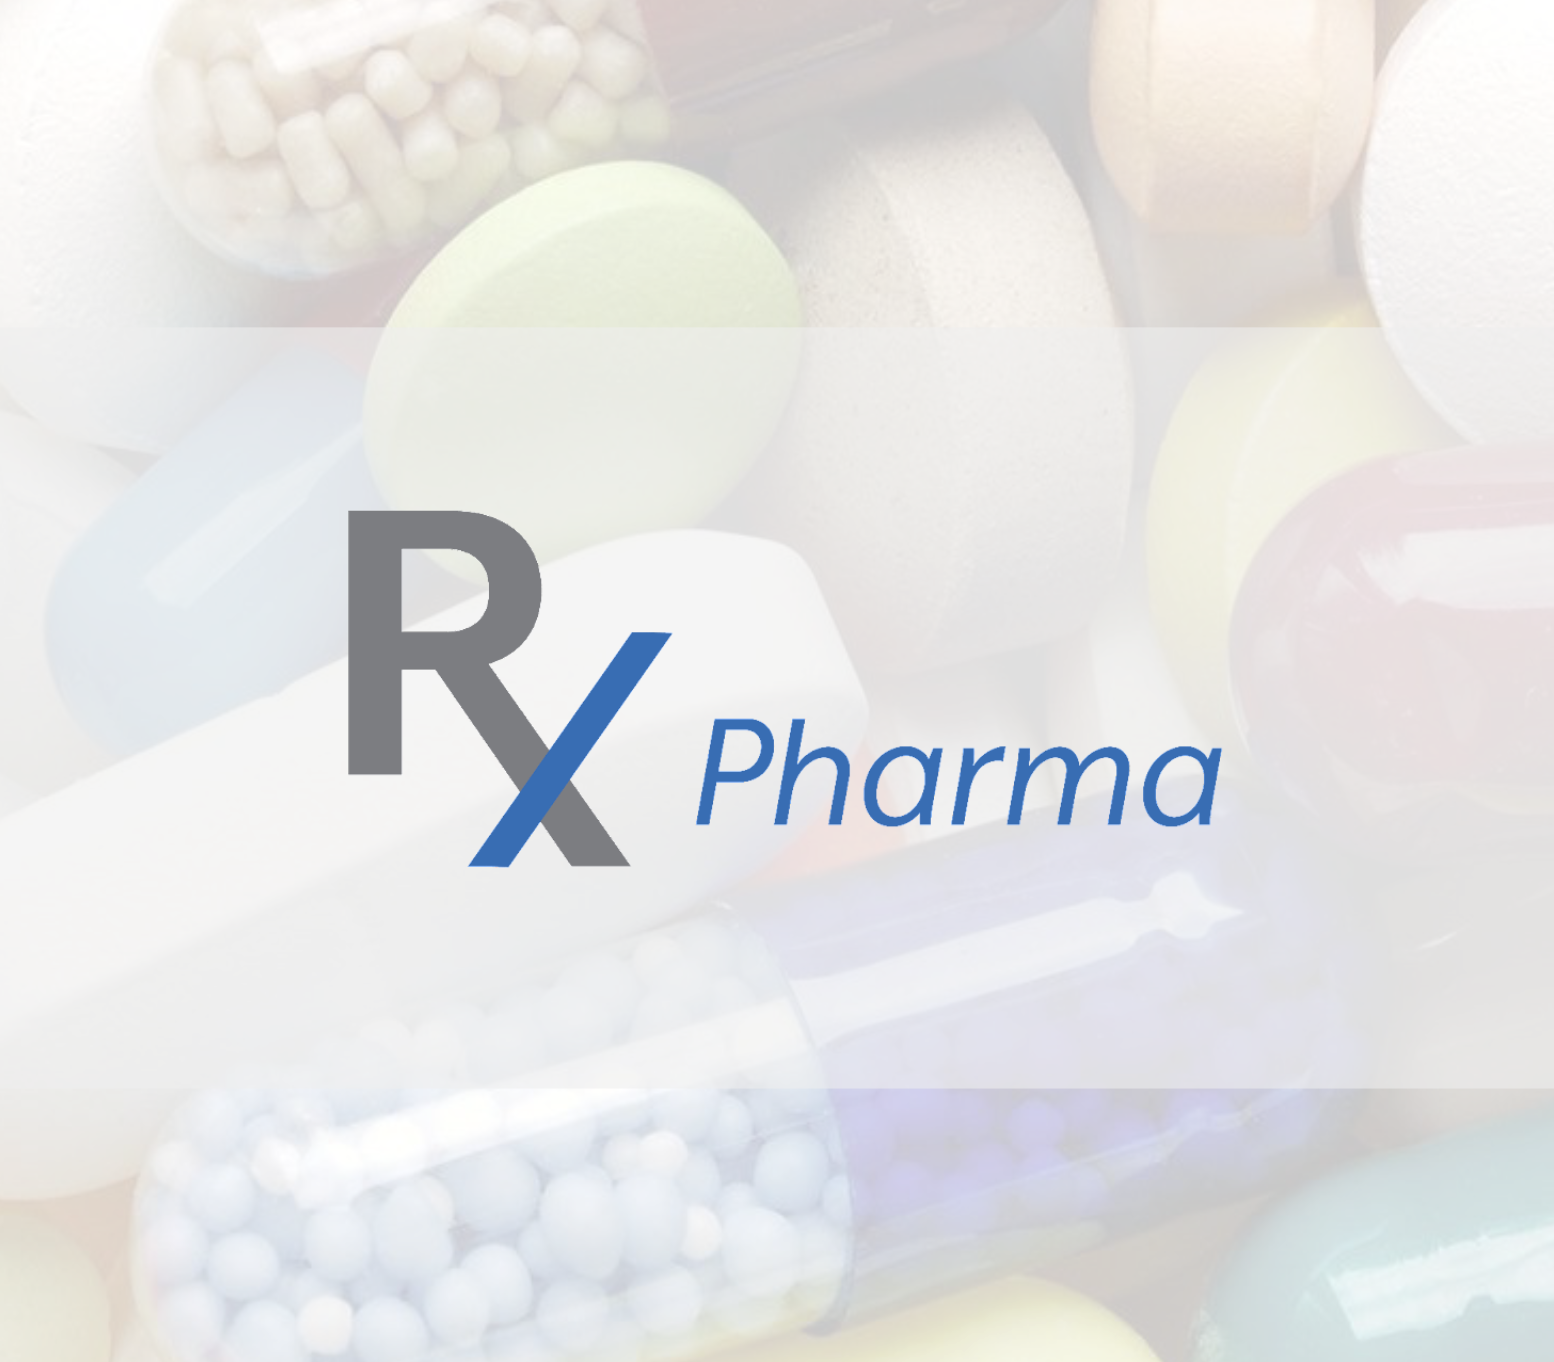 R/Pharma on pill background.